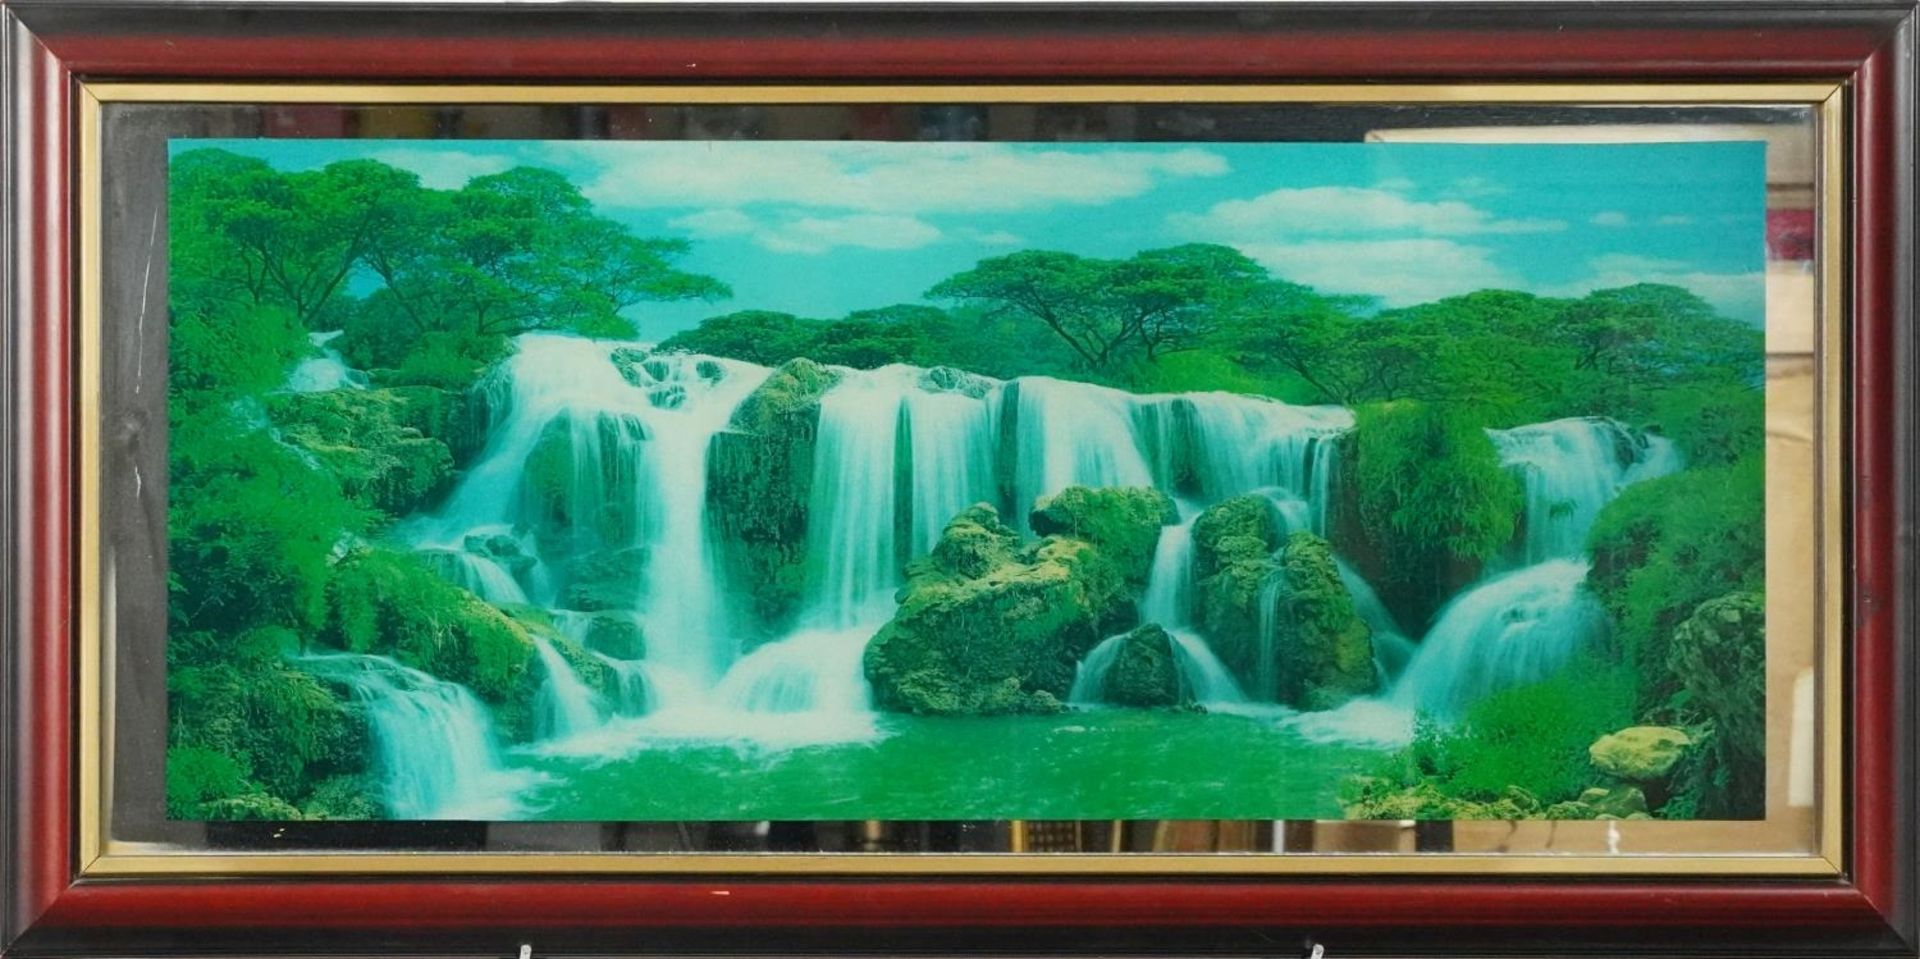 Wall hanging illuminated moving waterfall picture, 98cm x 48cm - Bild 2 aus 3